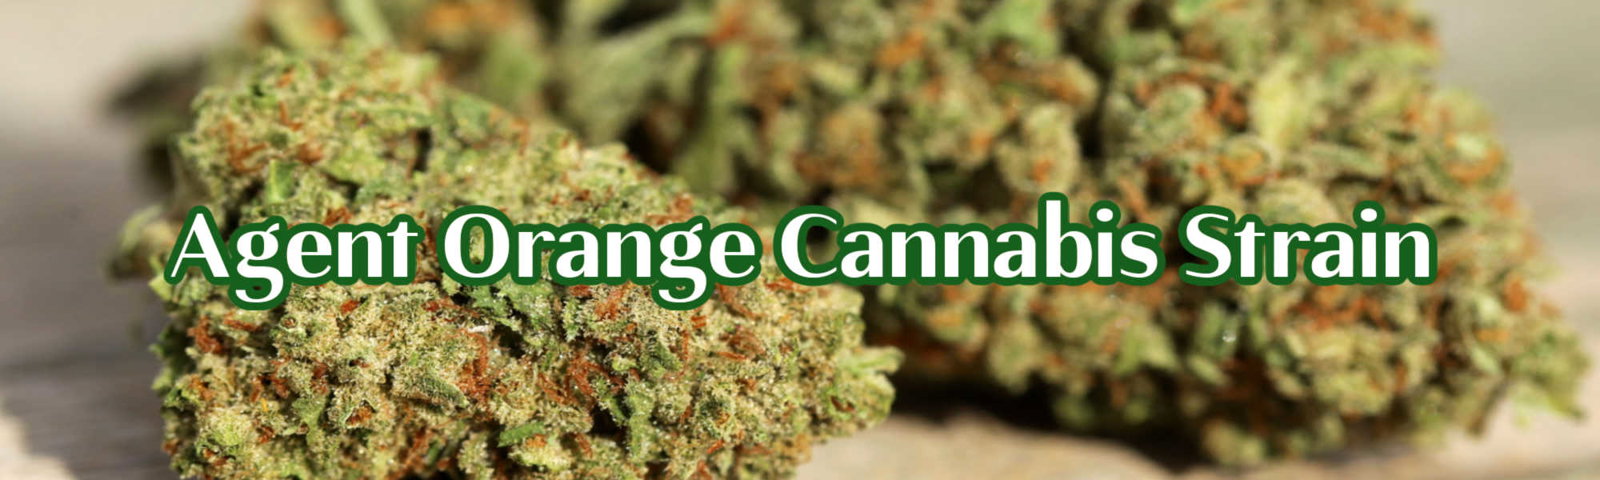 Agent Orange Cannabis 